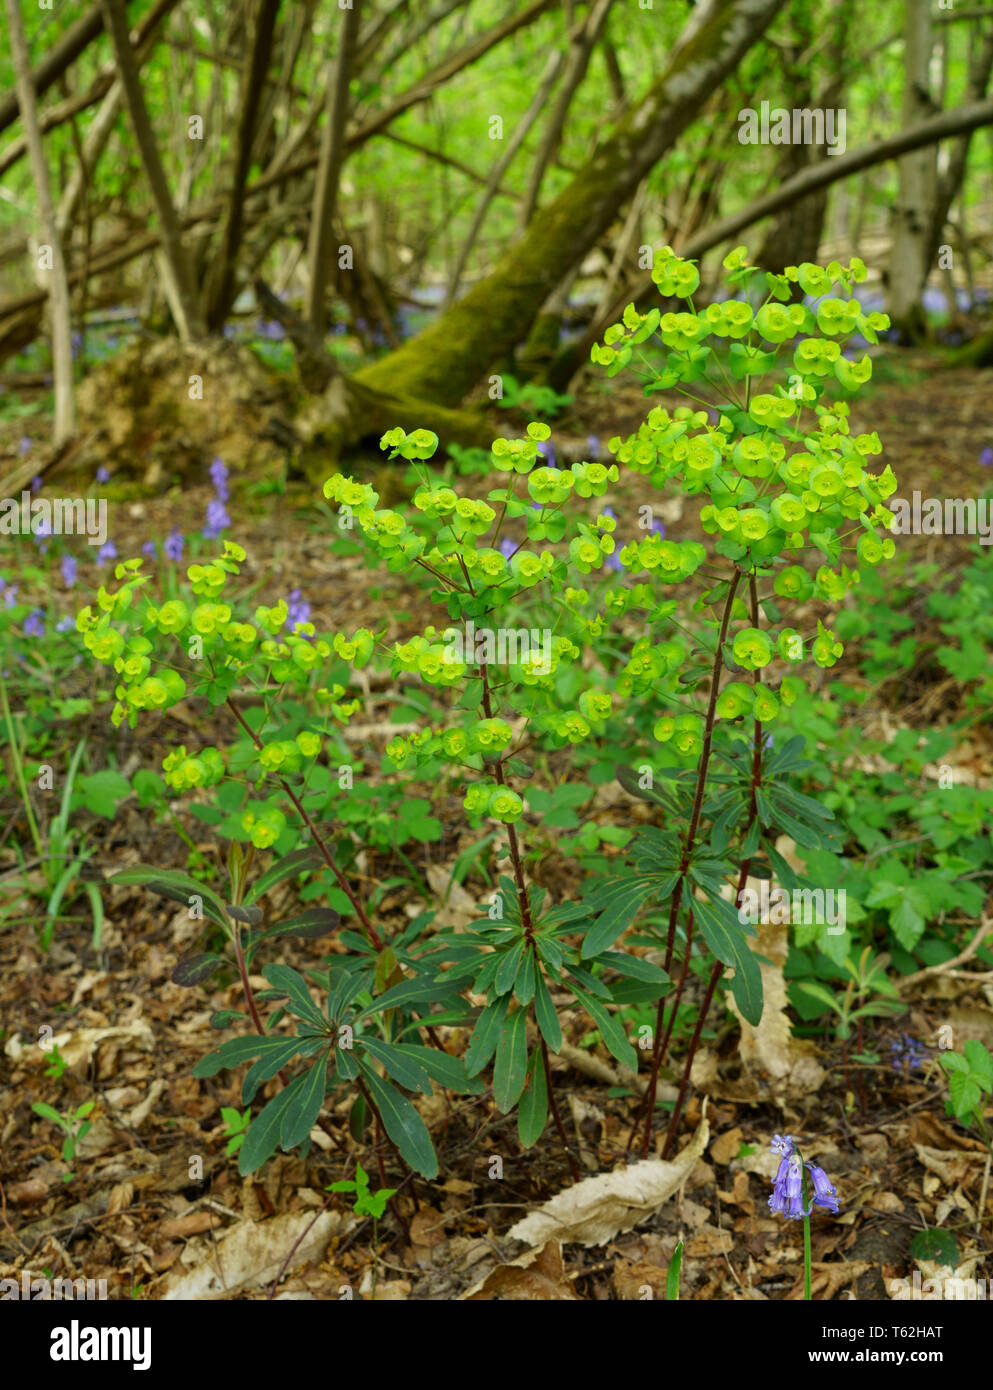 Holz wolfsmilch Euphorbia amygdaloides Pflanze Blüte im Frühling. Stockfoto